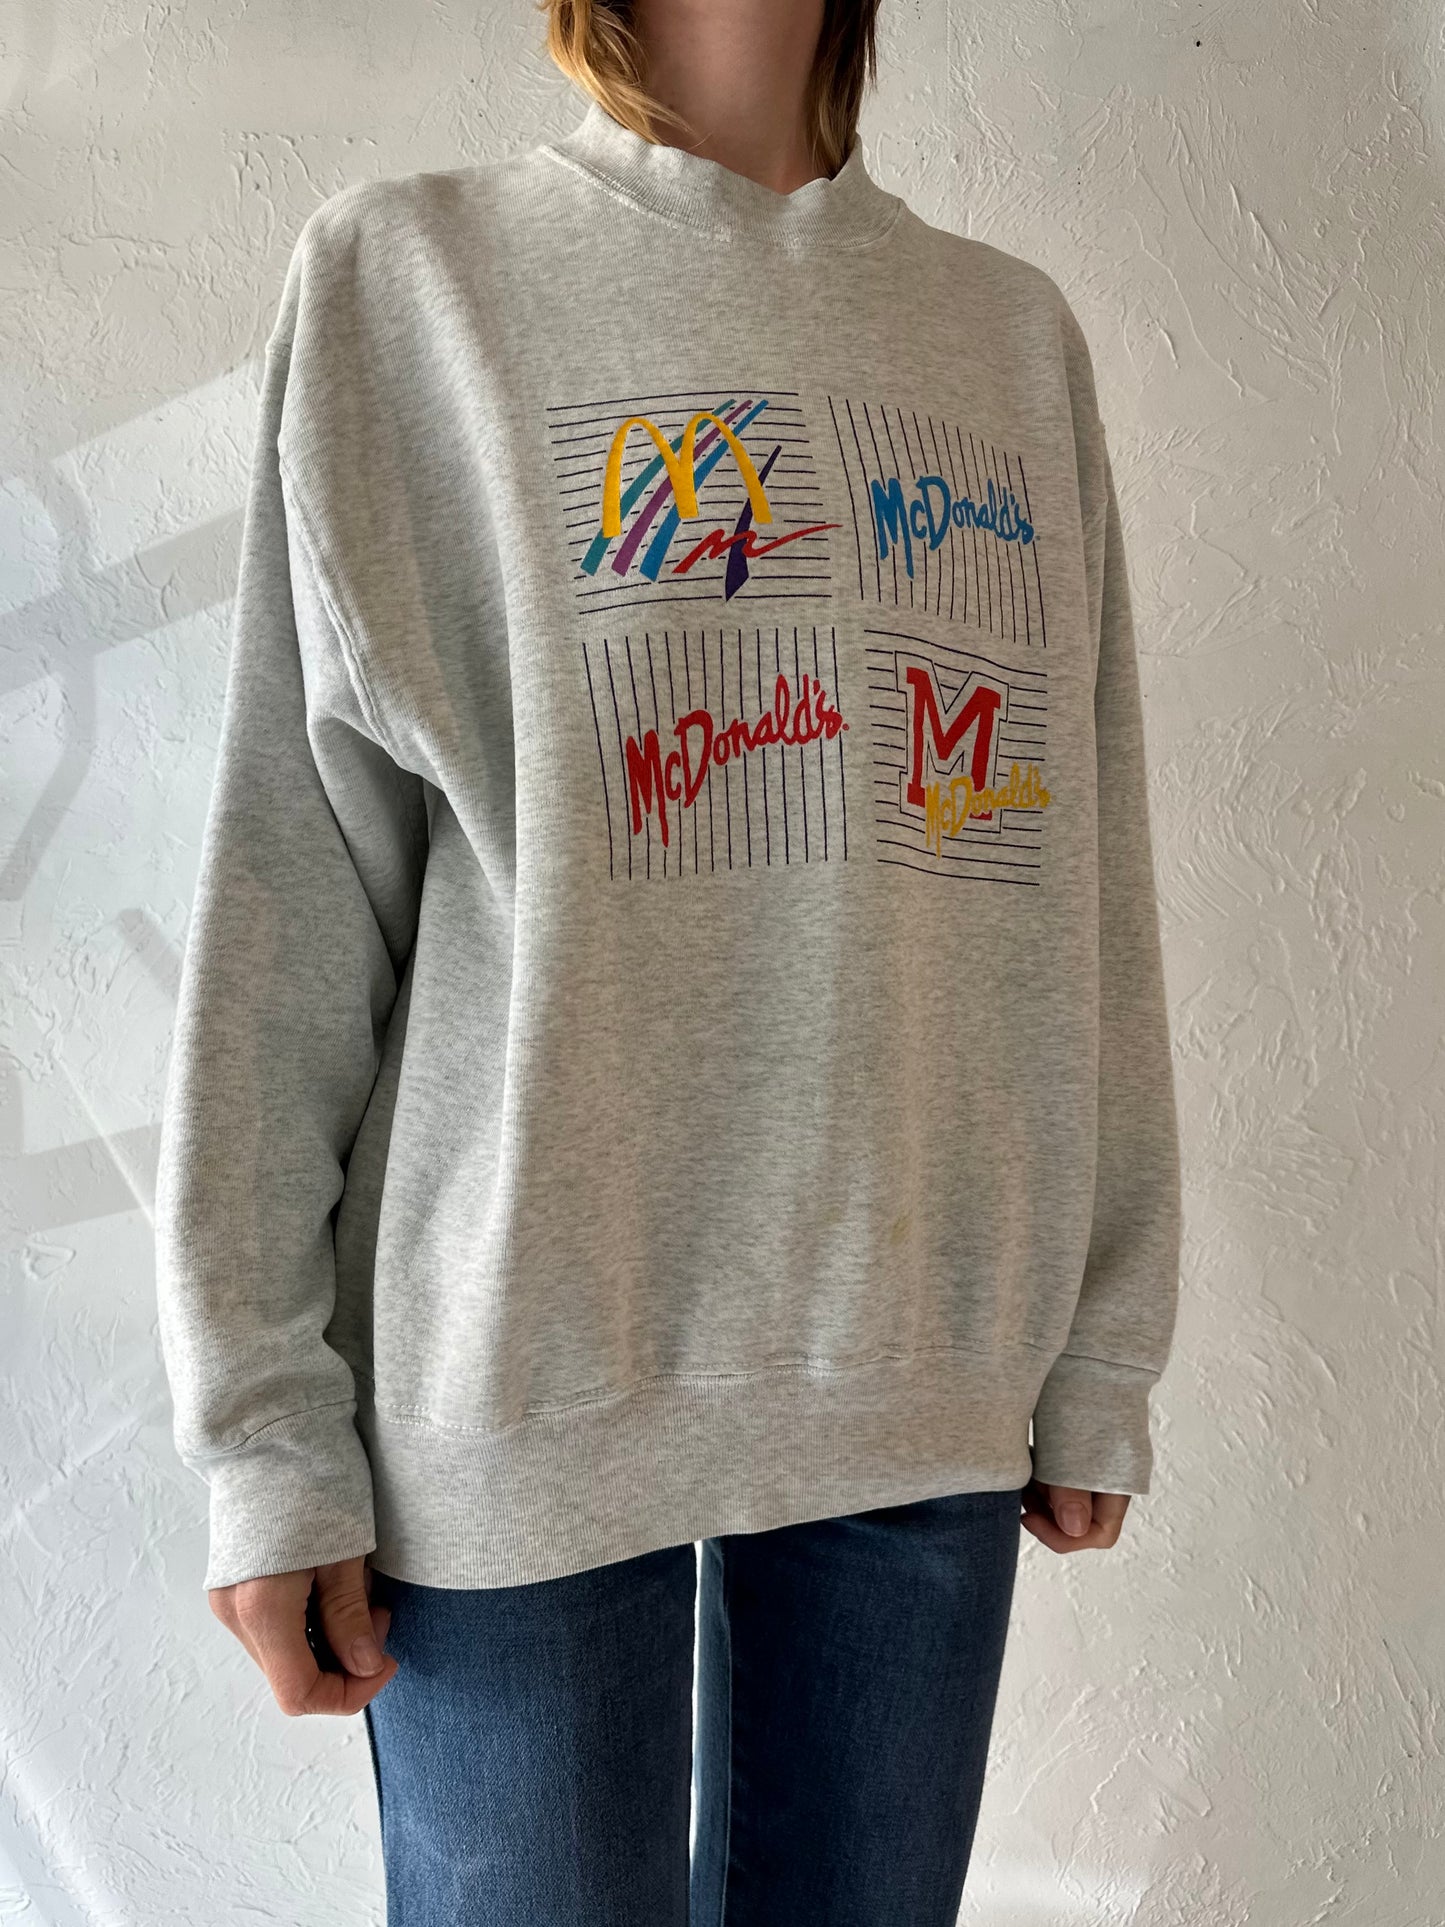 90s 'Mcdonalds' Fruit Of The Loom Crew Neck Sweatshirt / Large